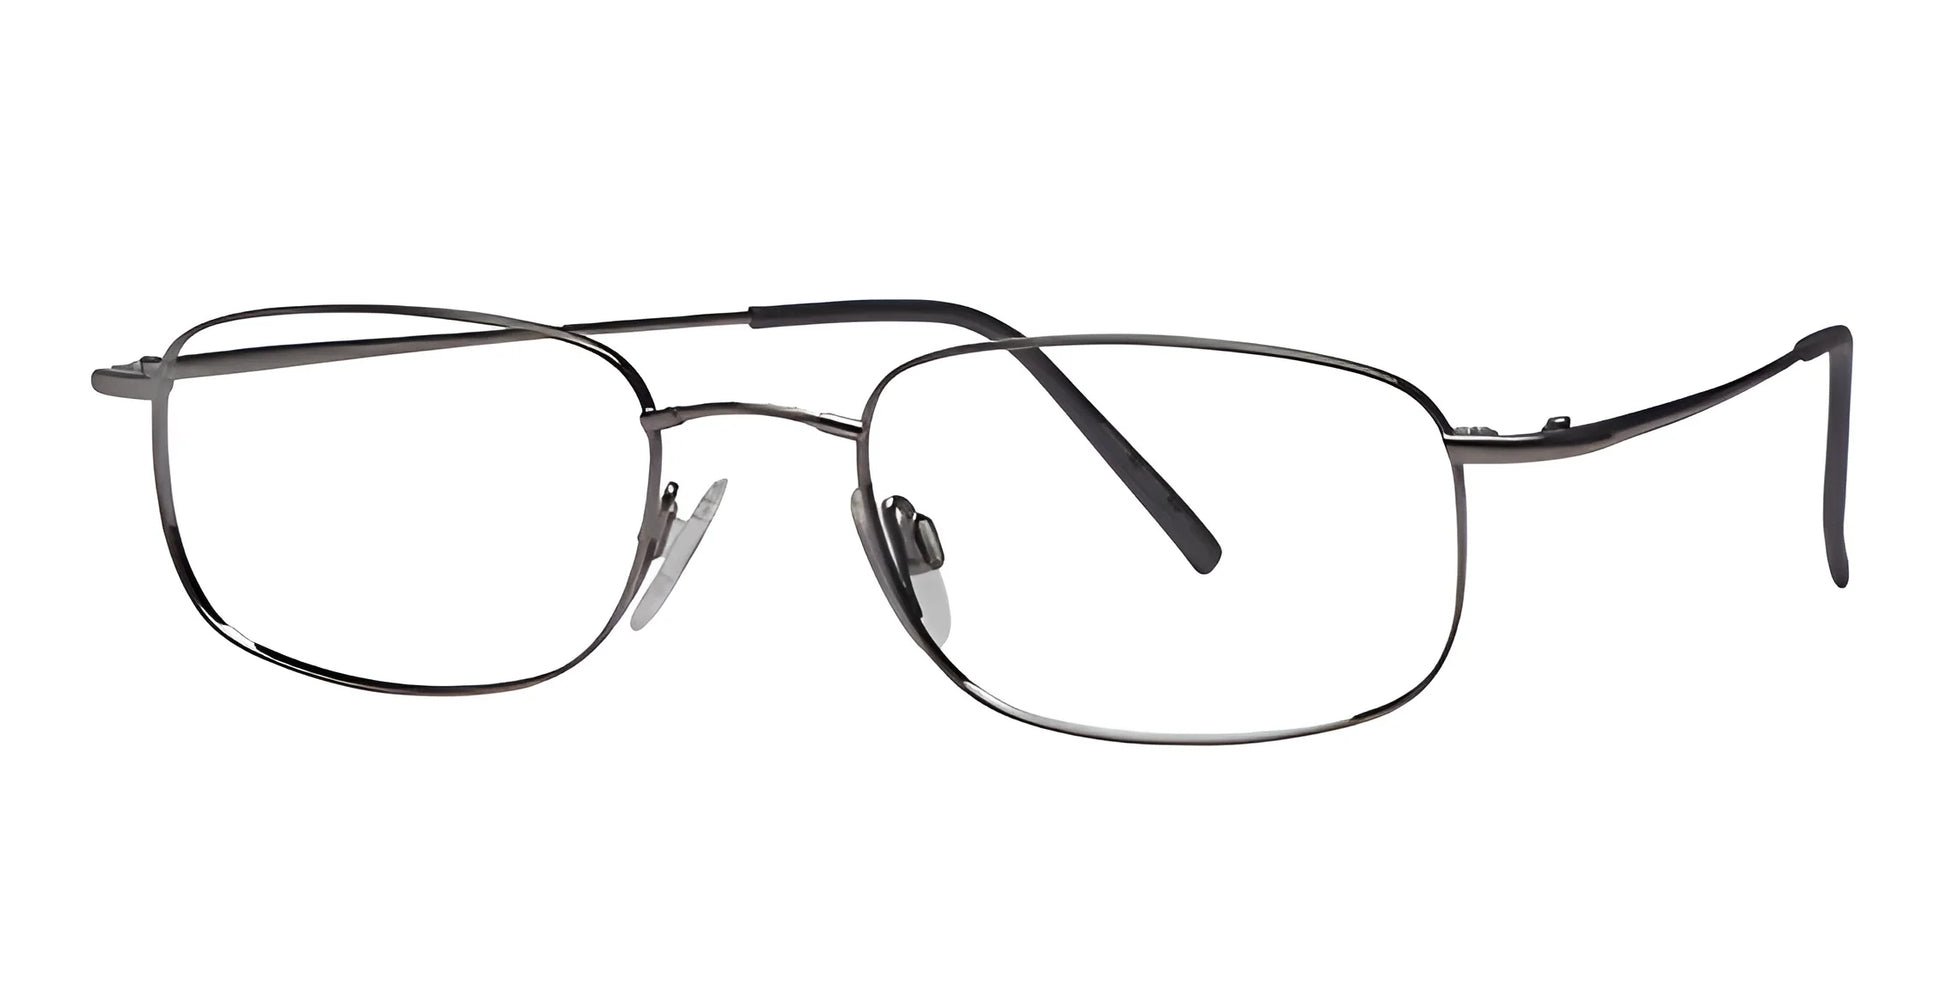 Flexon 610 Eyeglasses Steel